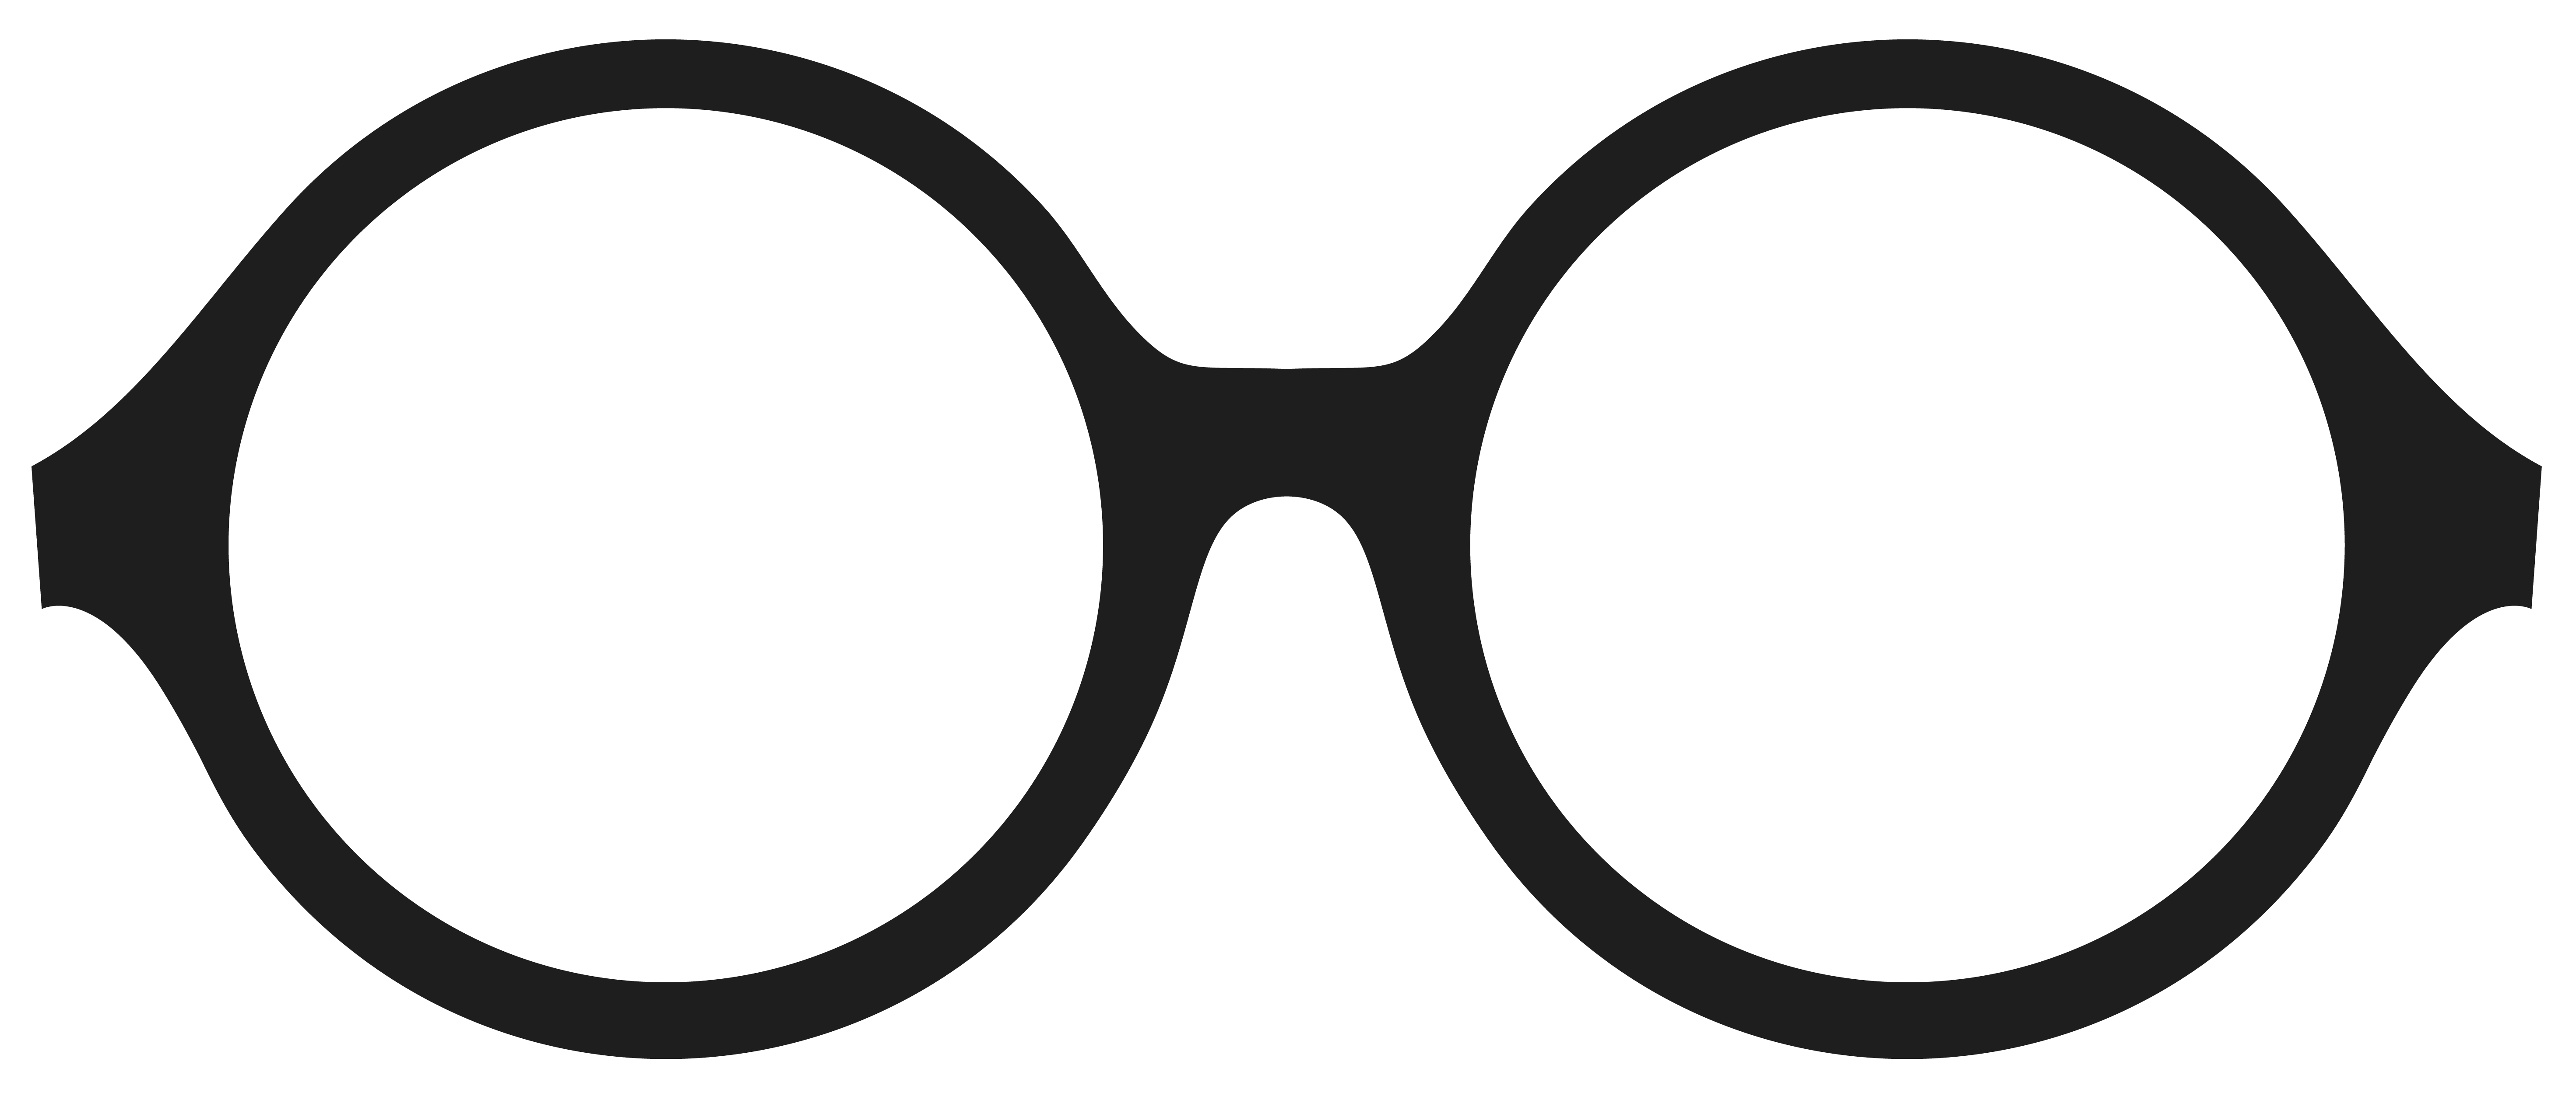 Eyeglass Vector Free Download Image PNG Image